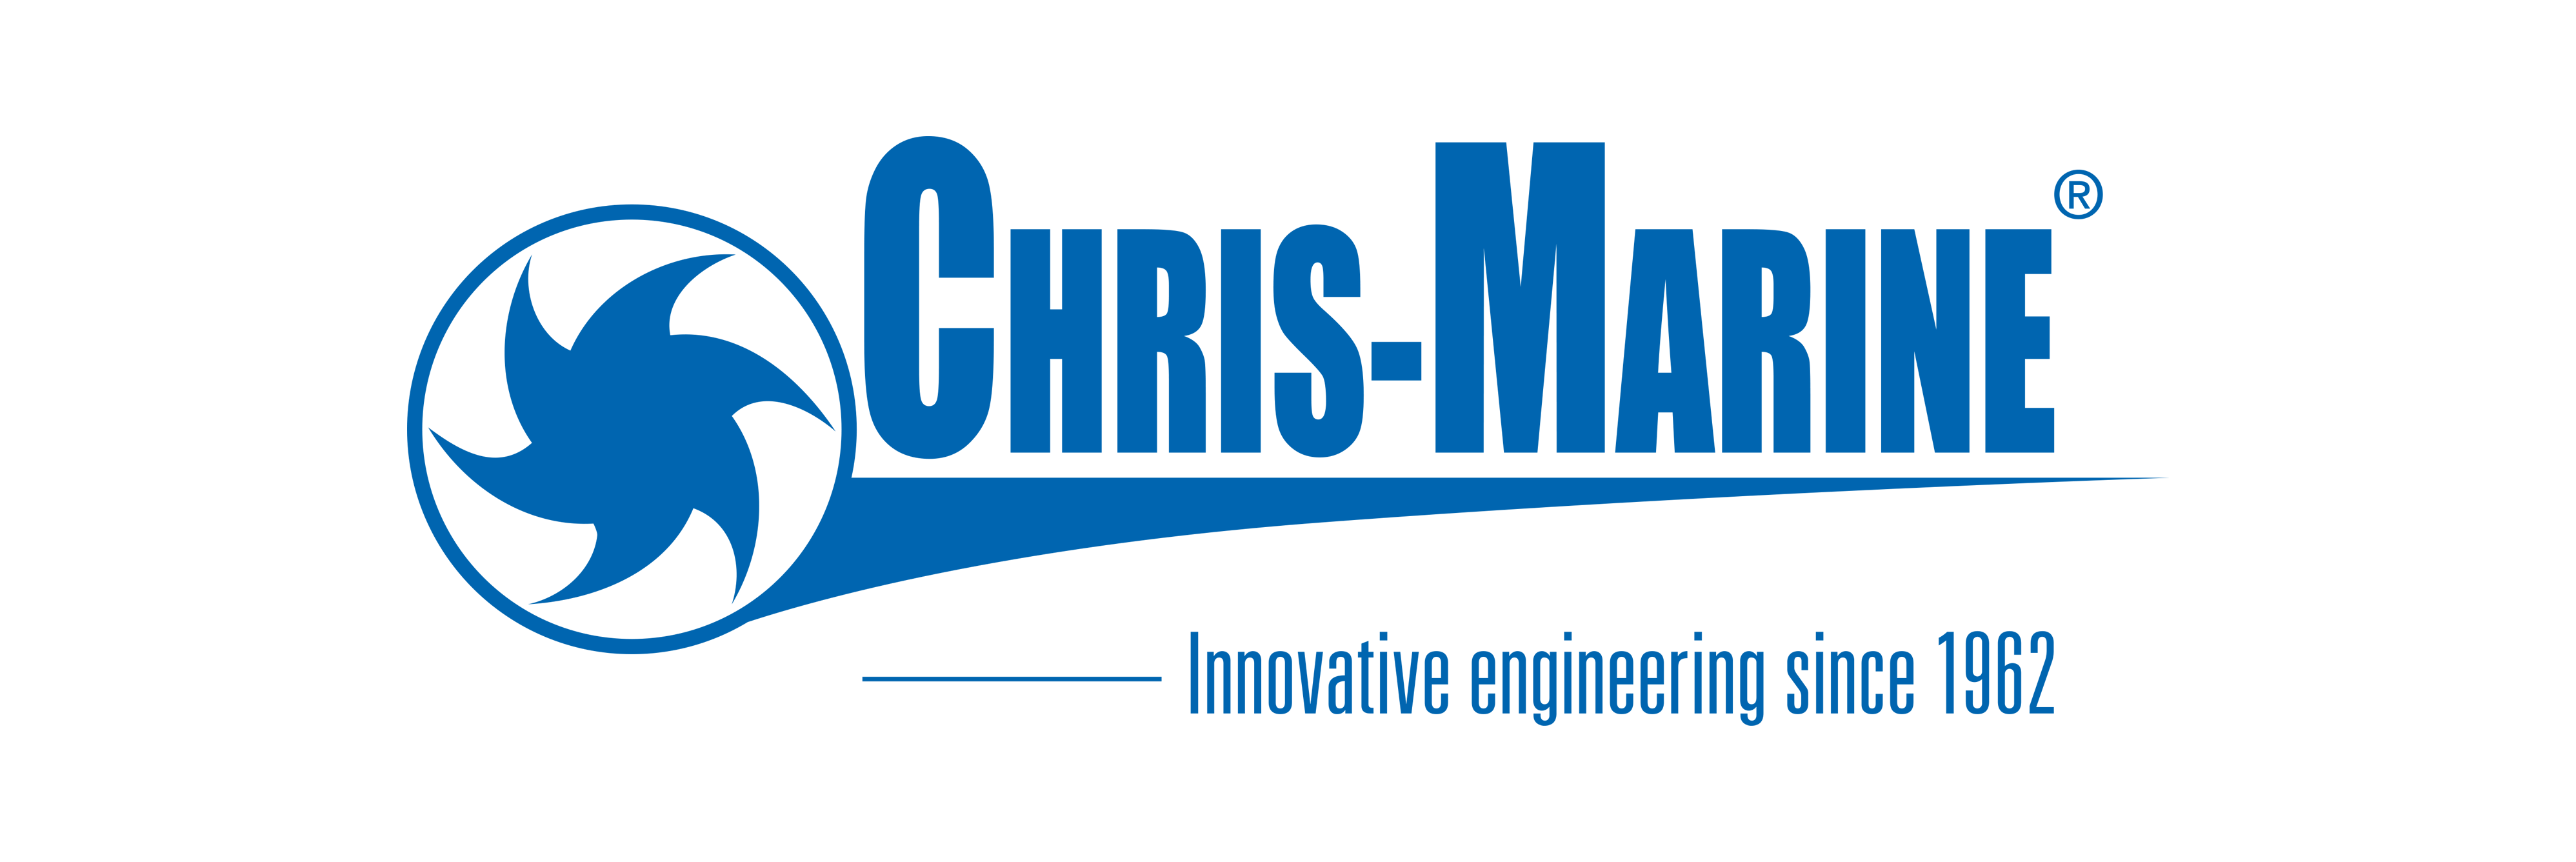 Chris Marine